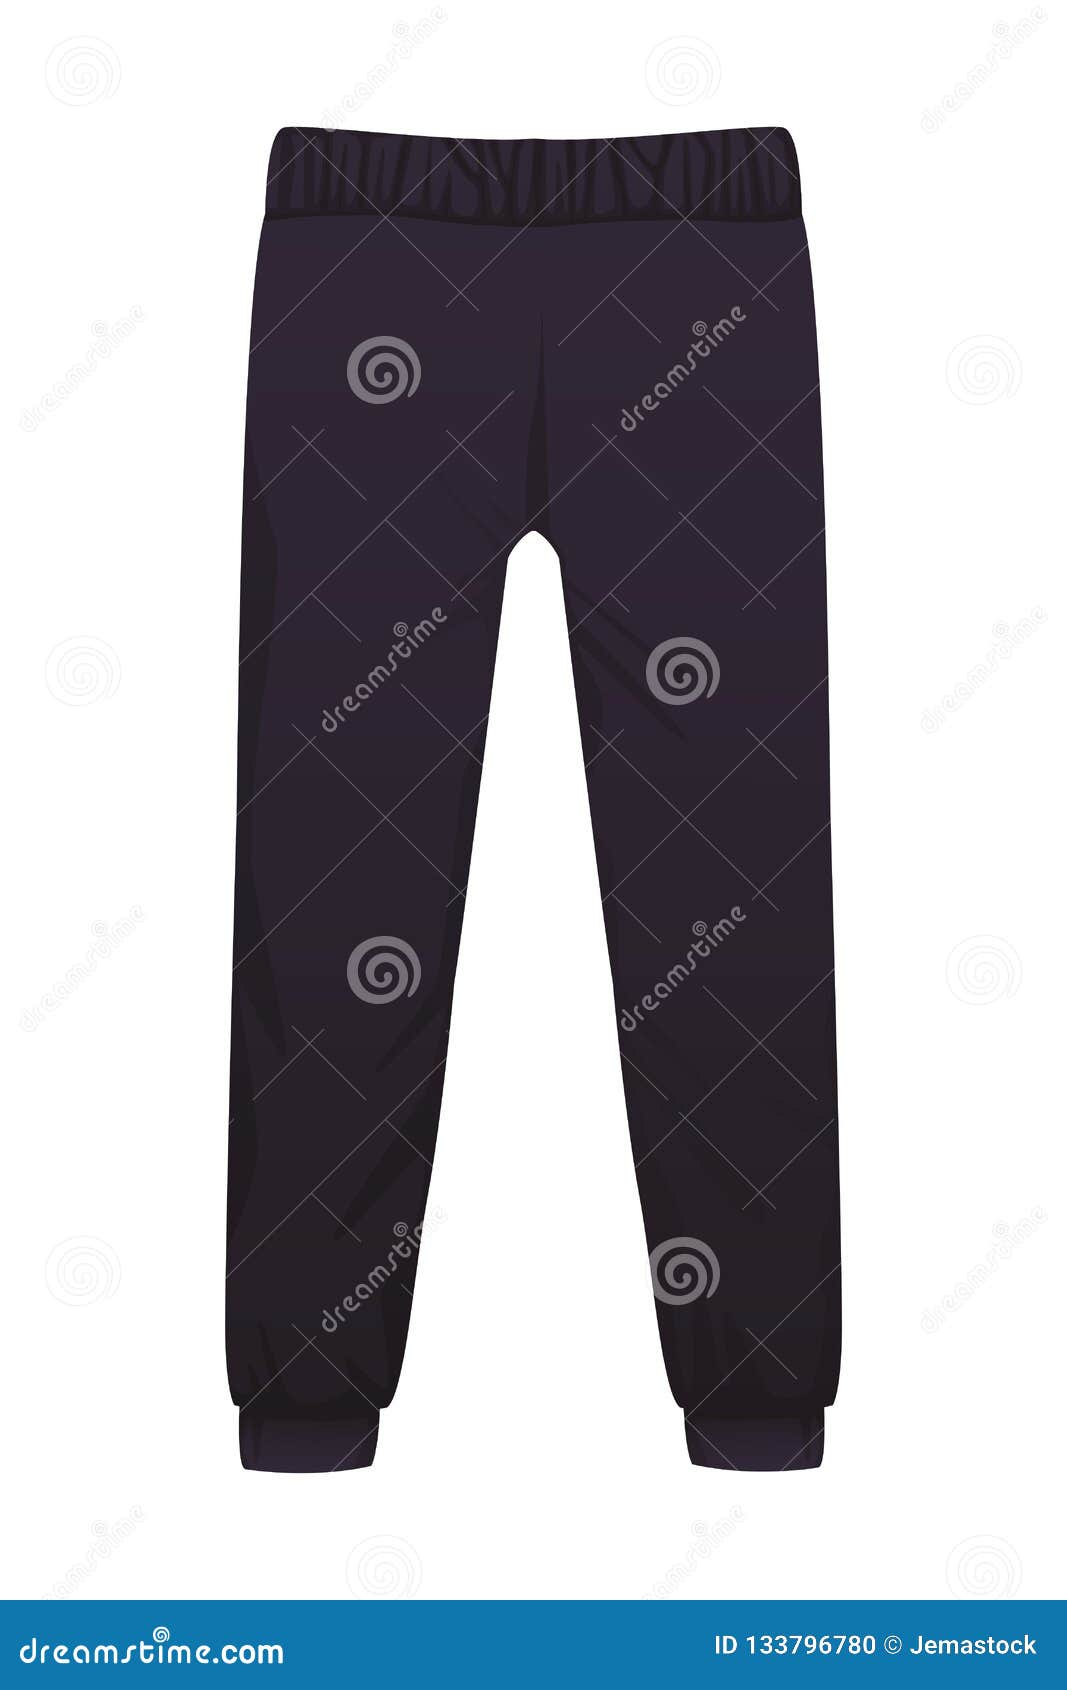 Male fitness pants stock vector. Illustration of sport - 133796780